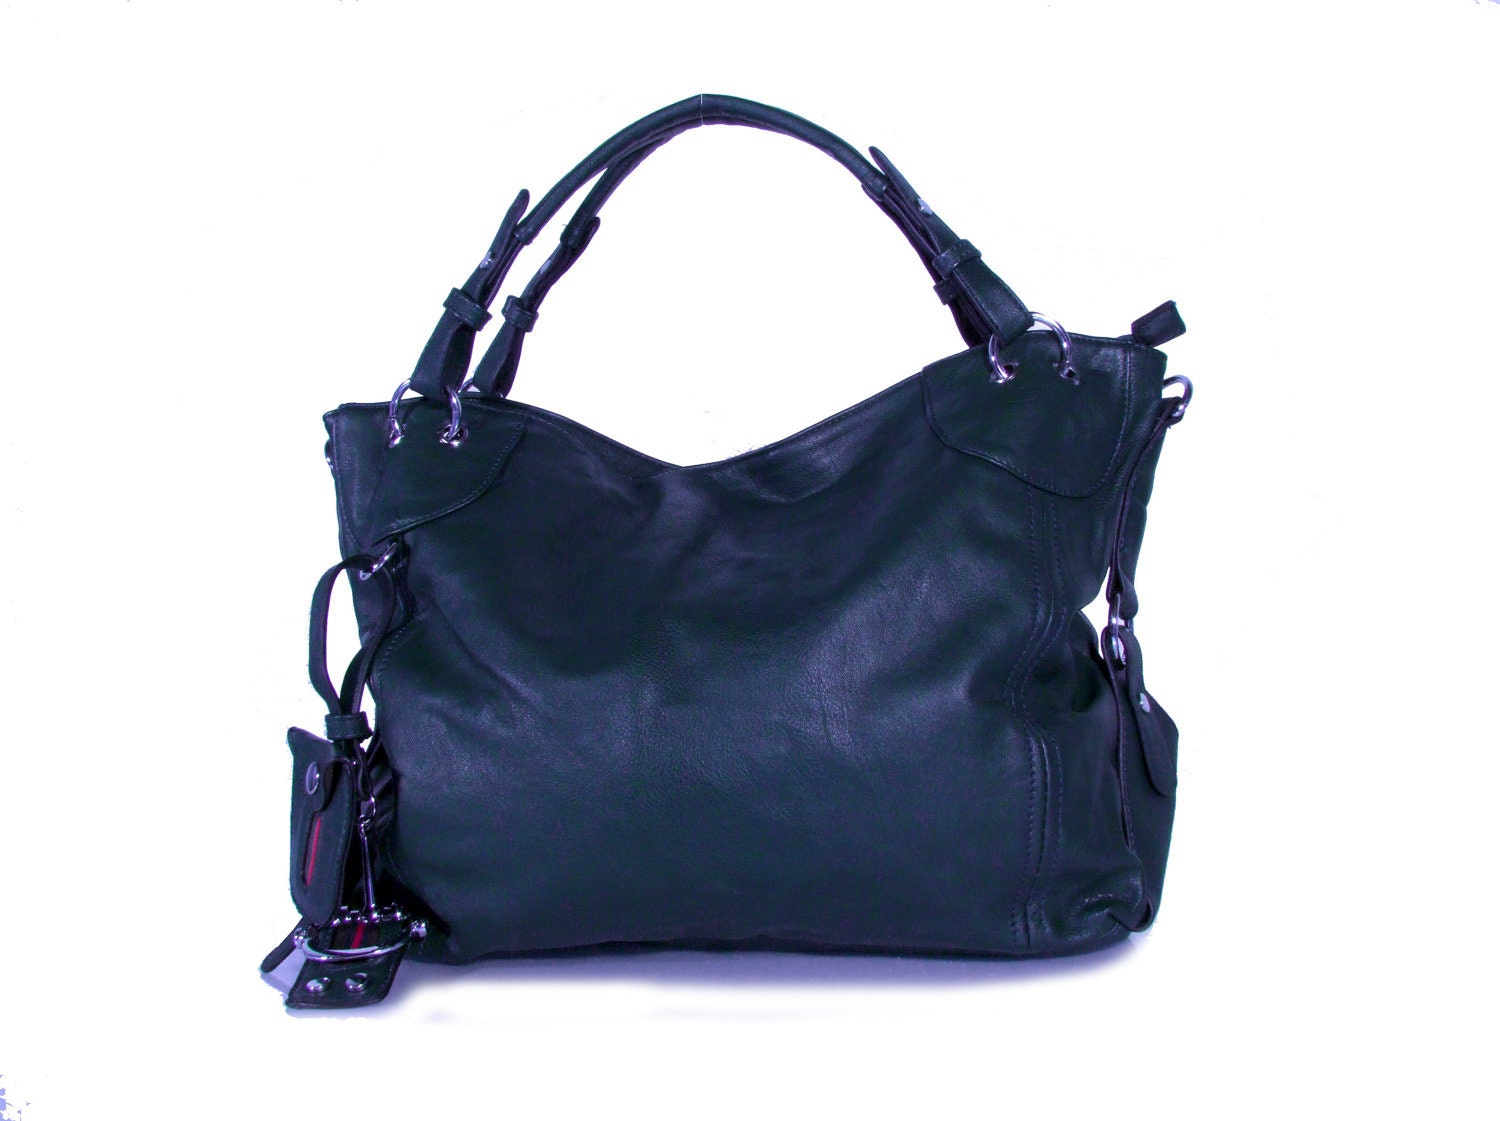 vegan leather handbag purse blue the by VeganLeatherHandbags